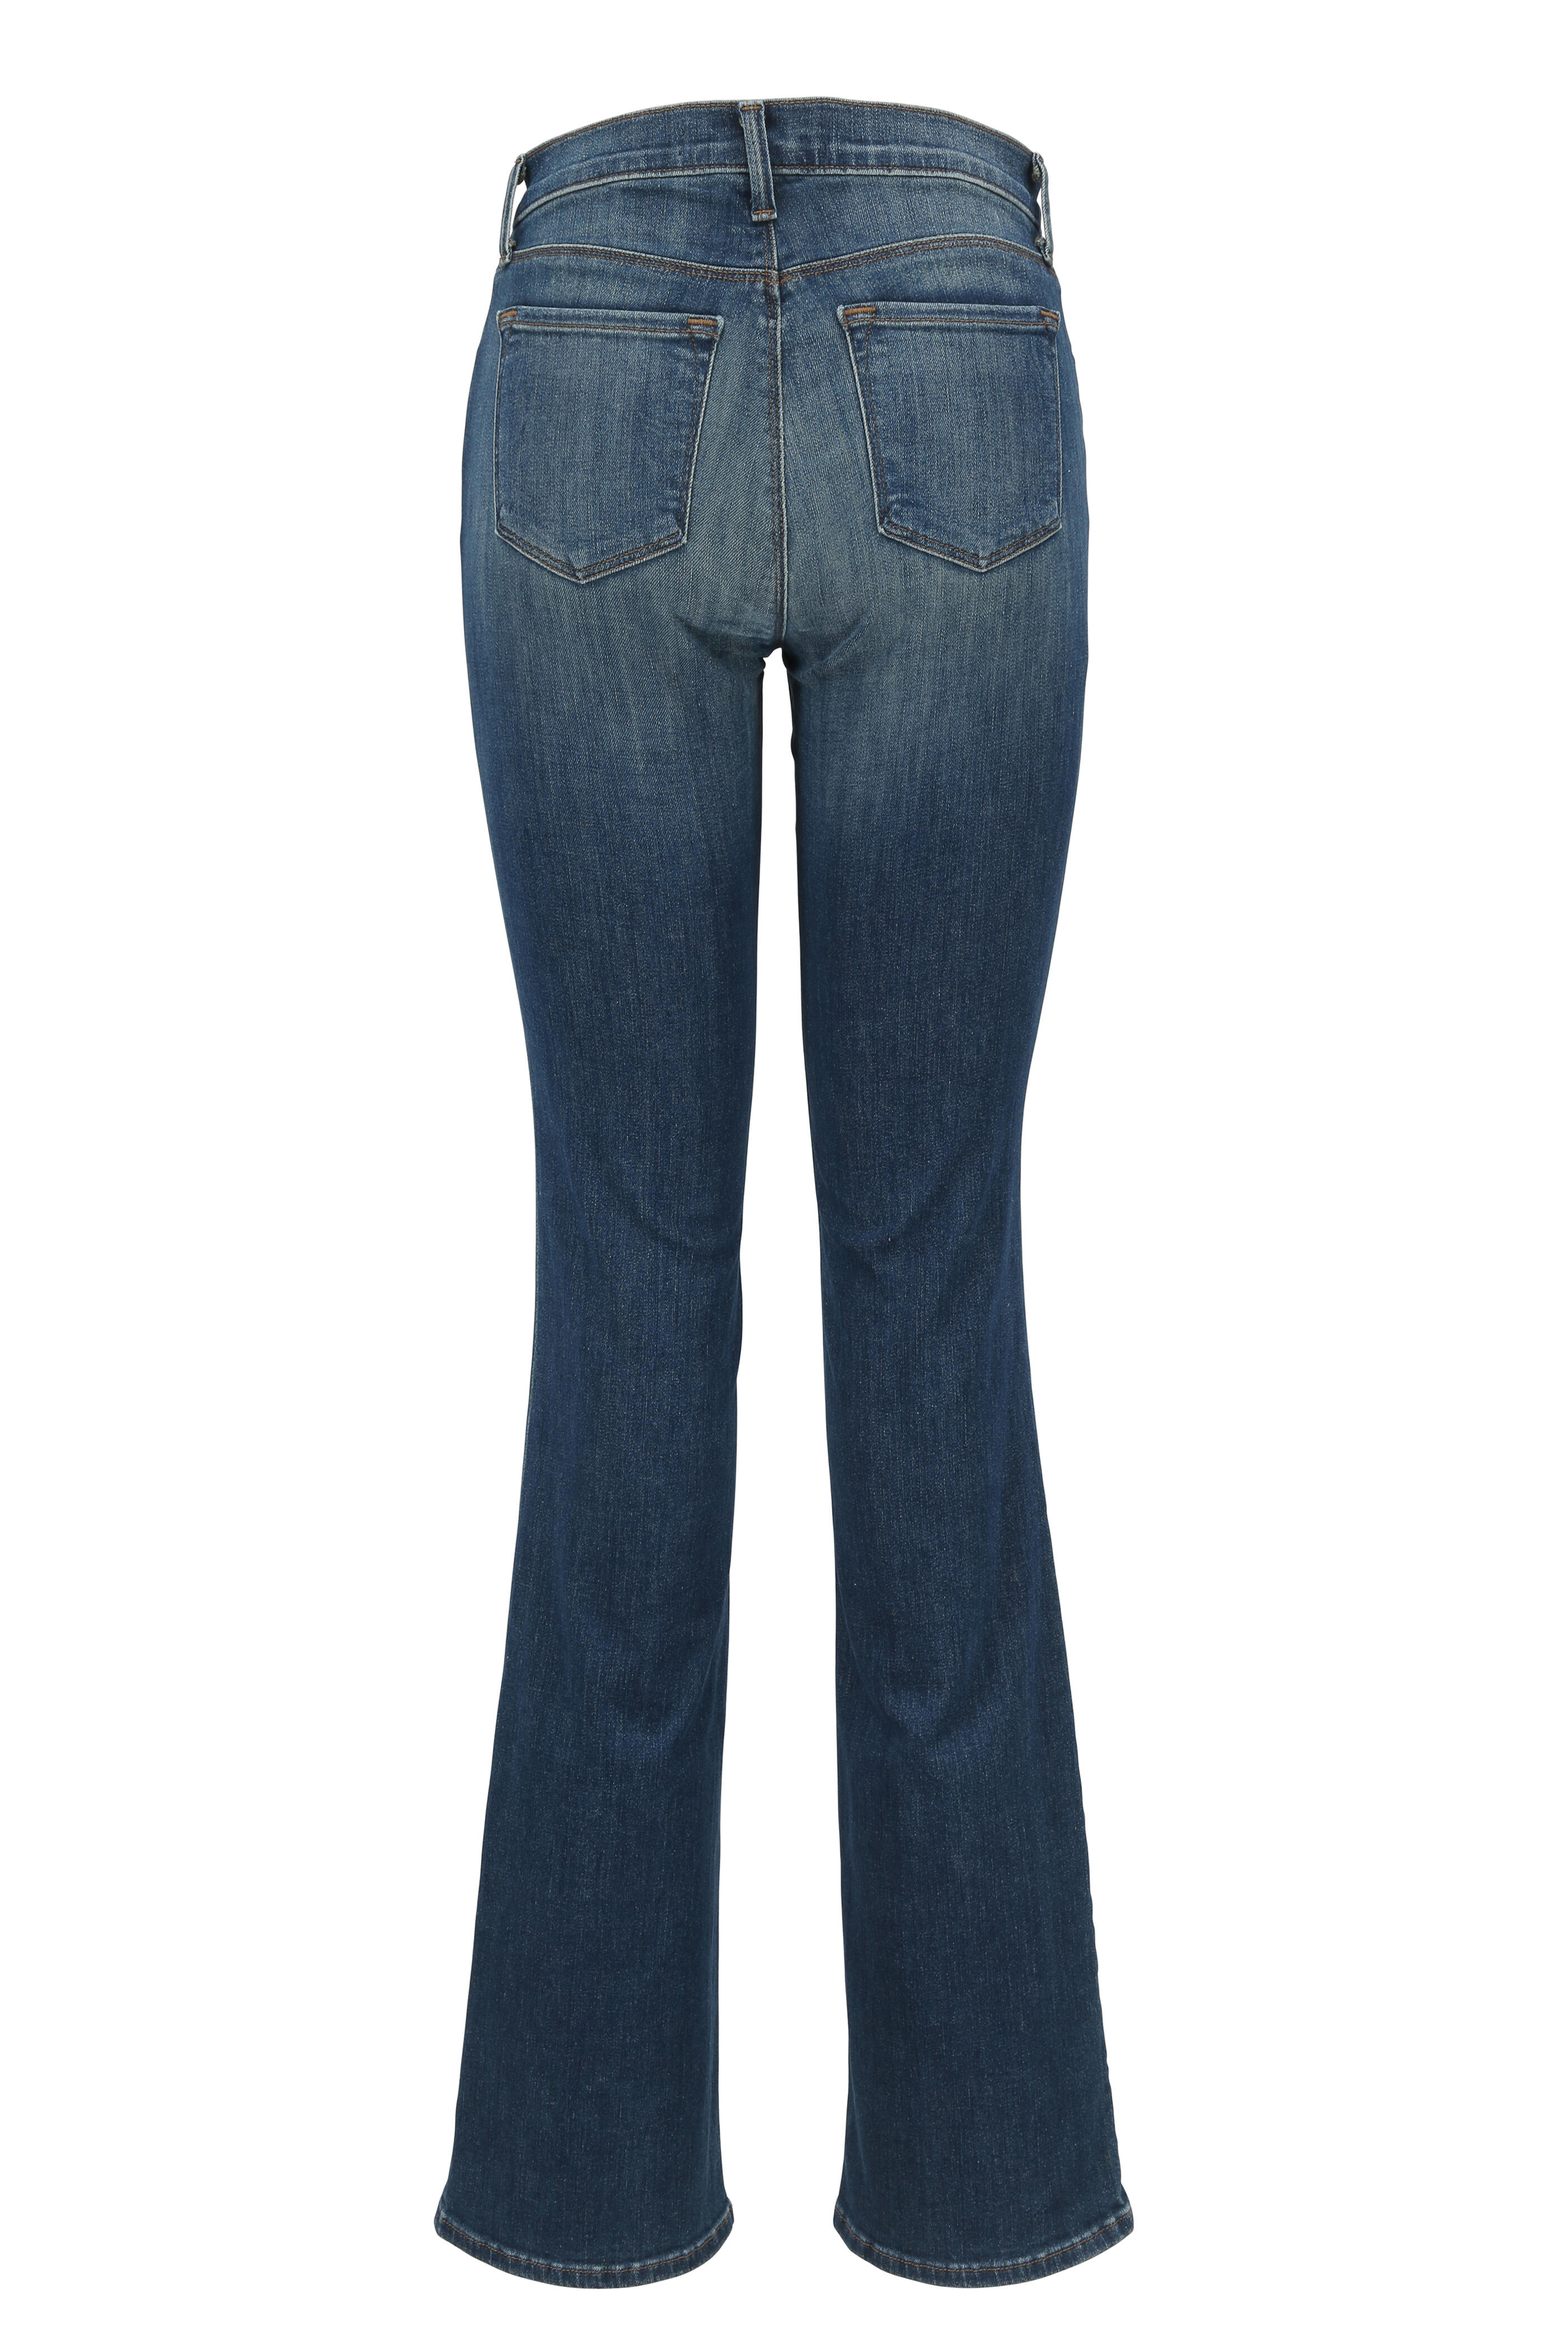 Bootcut/flare jeans? : r/mensfashion